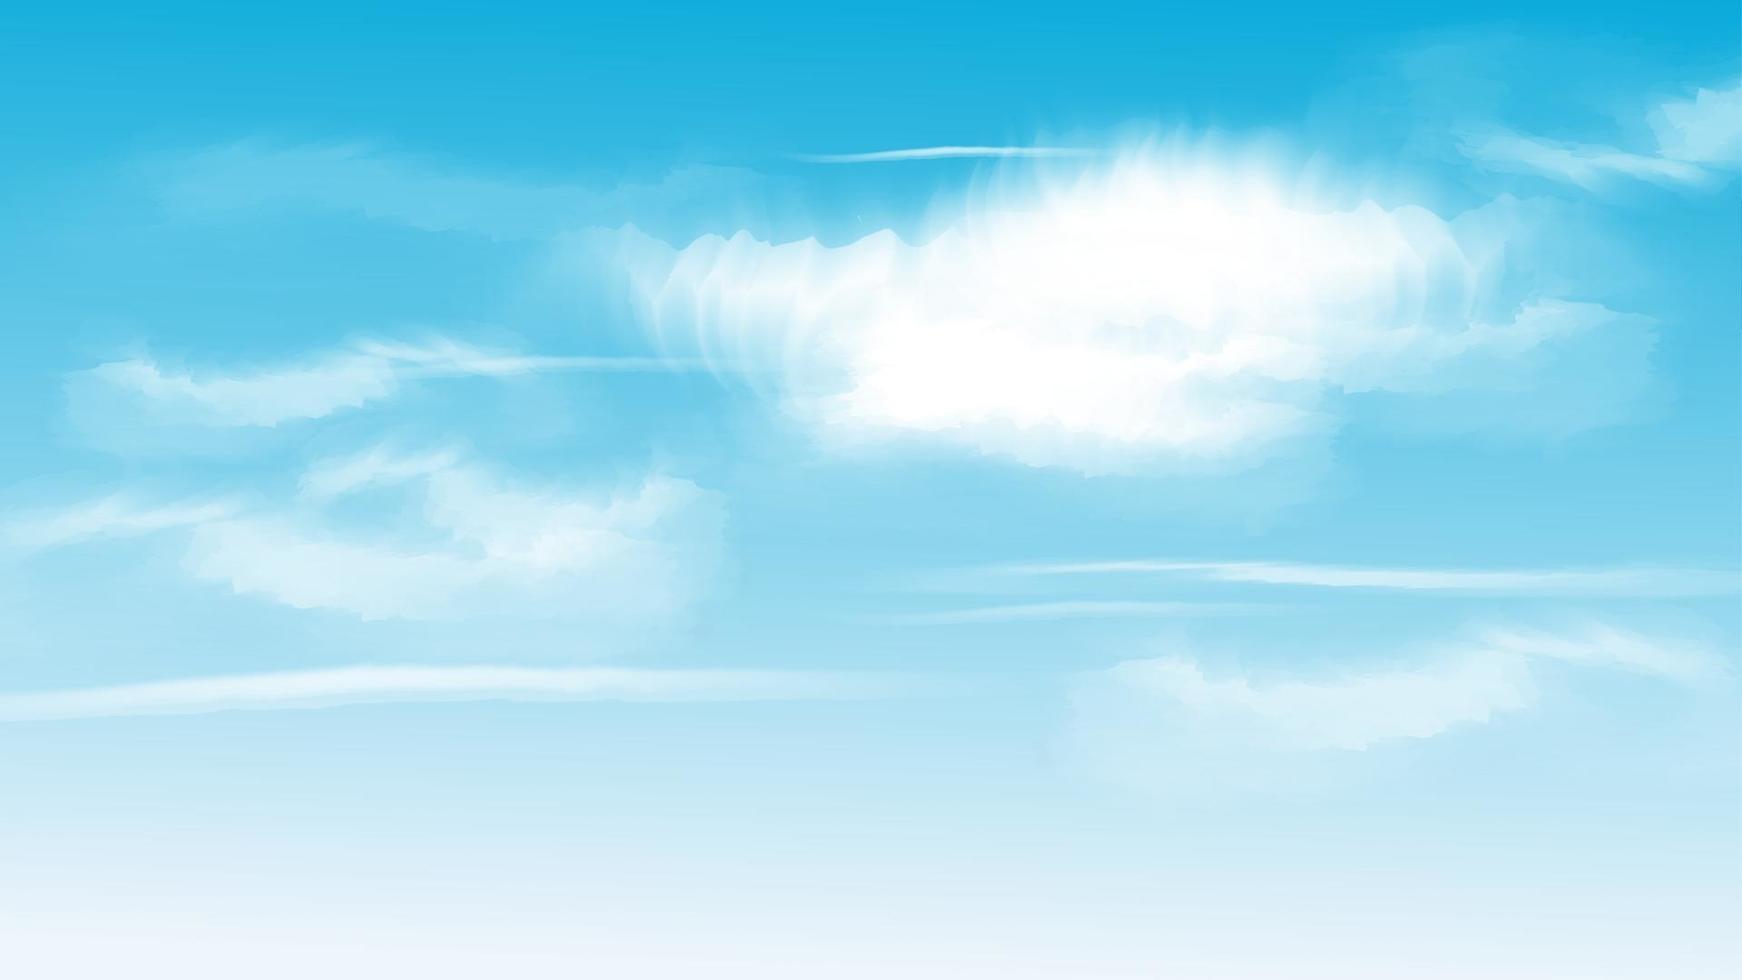 Sky clouds vector illustration.